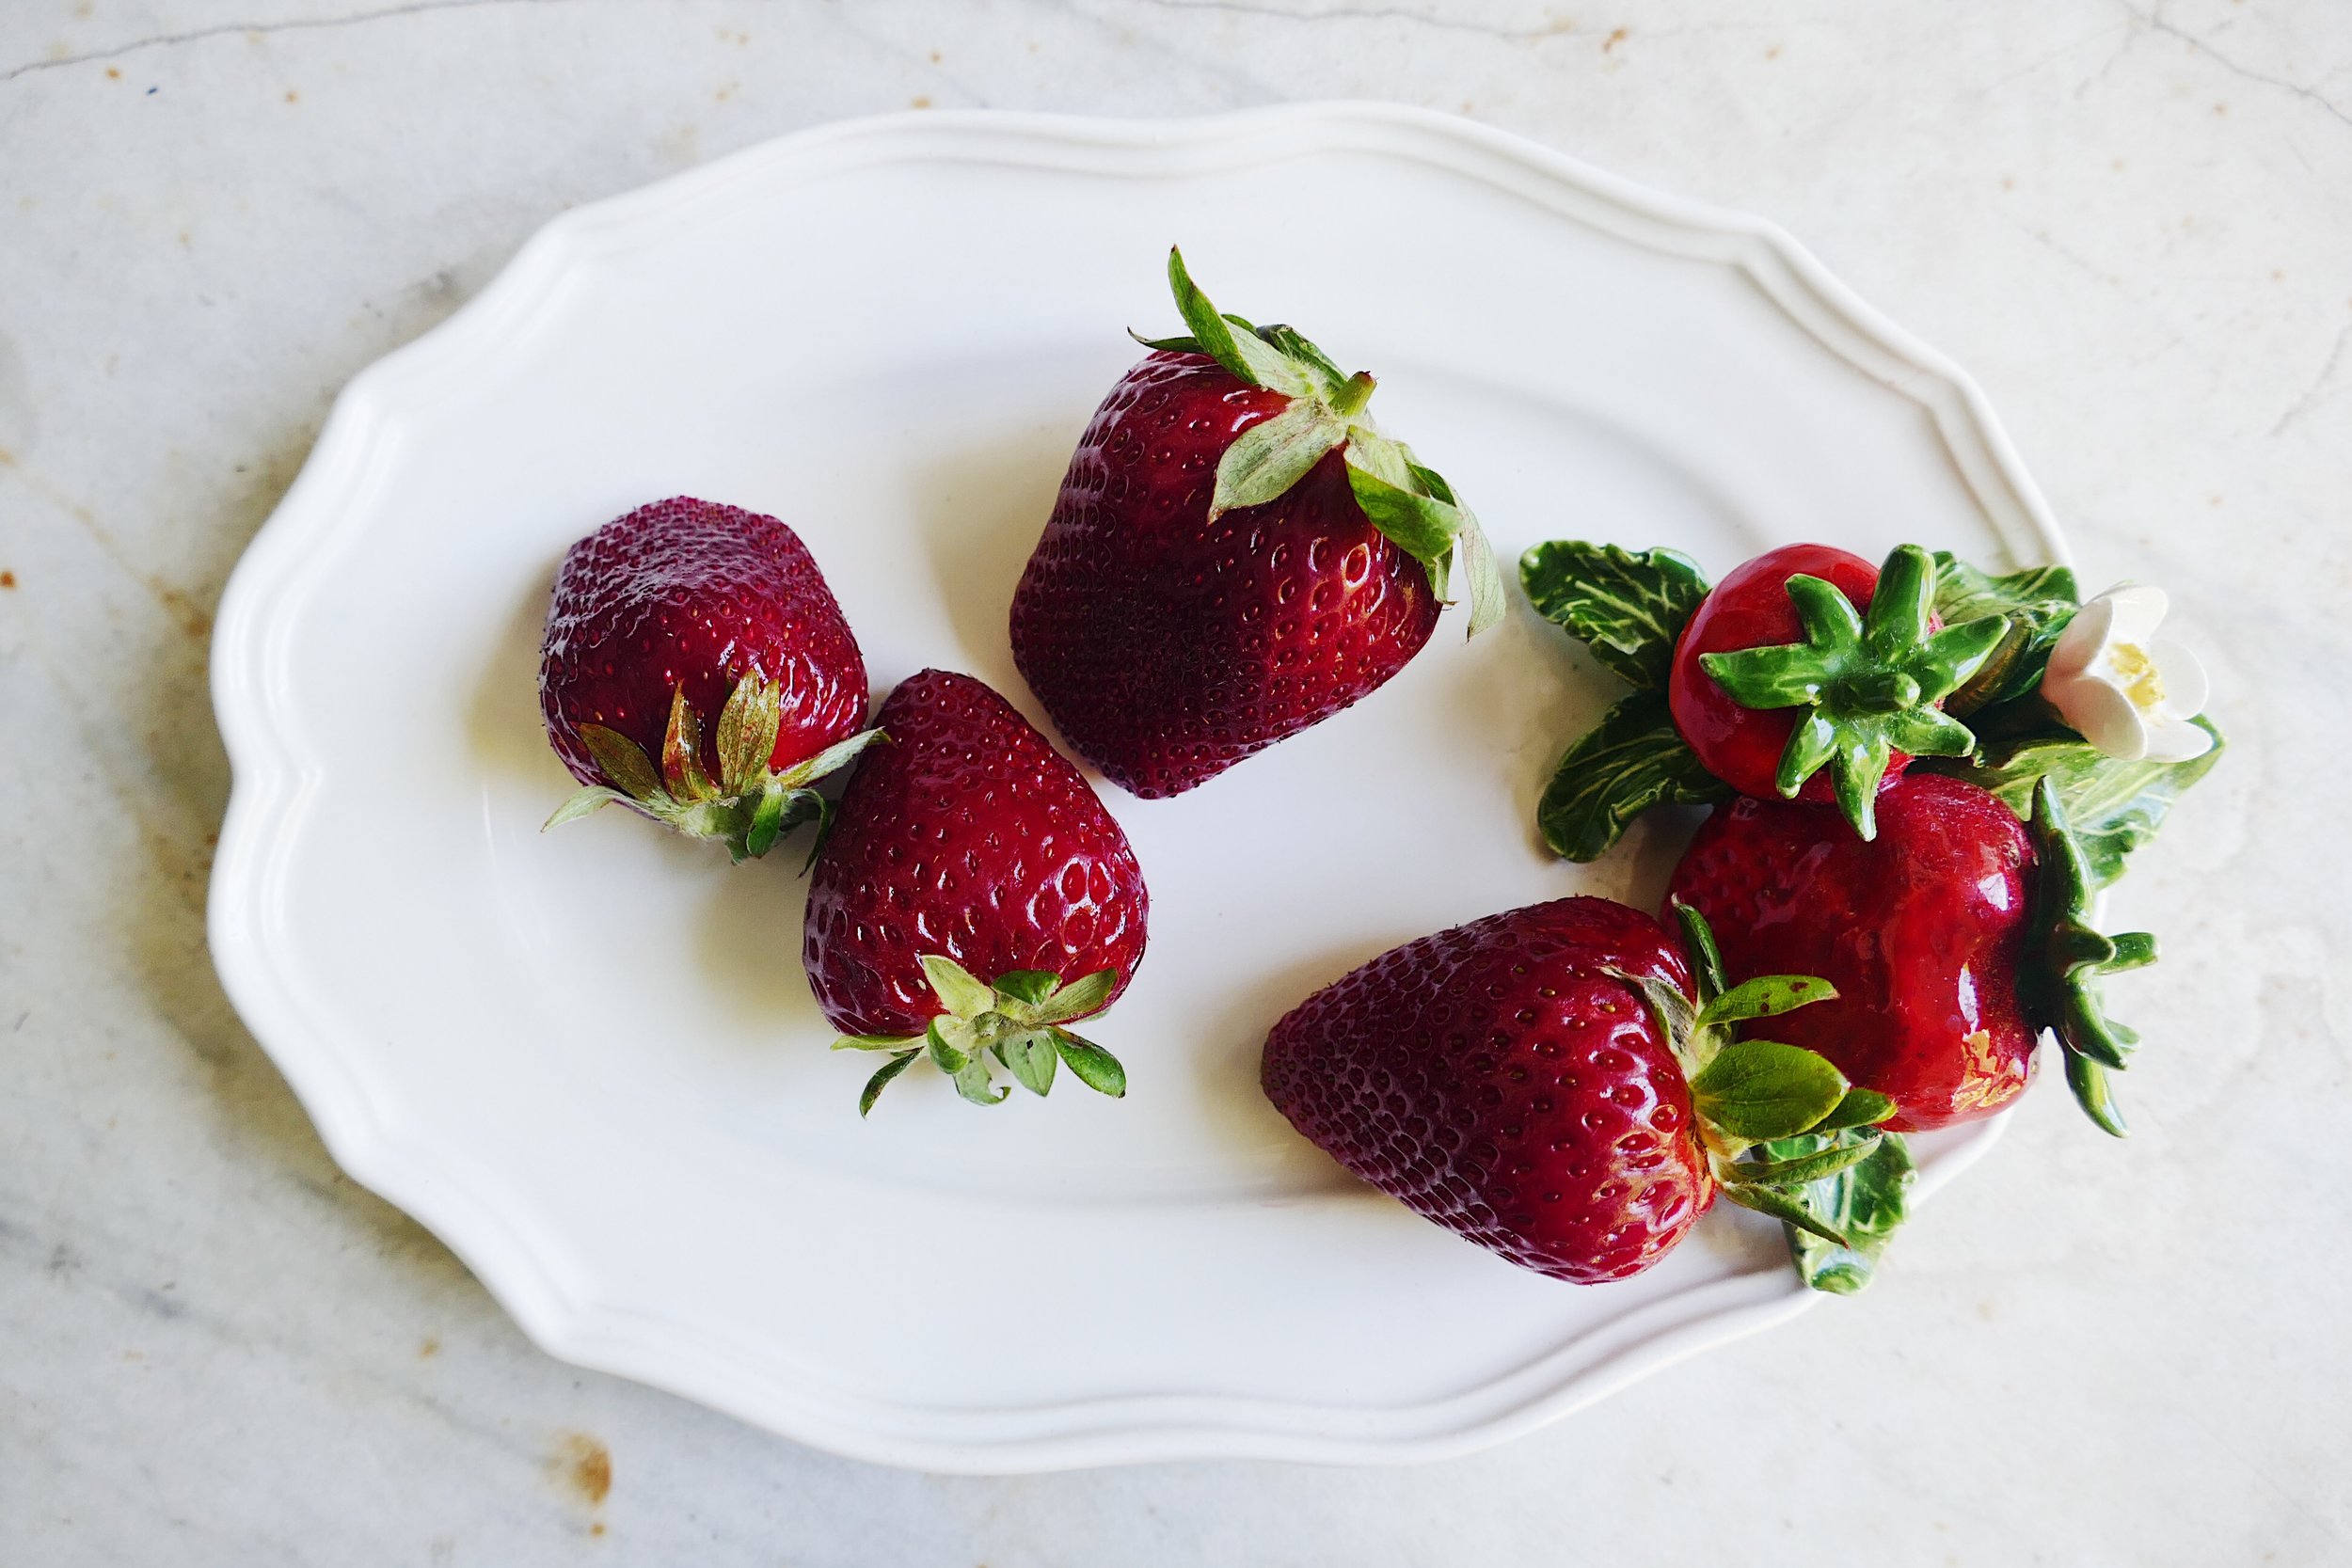 Simple Dish of Strawberries